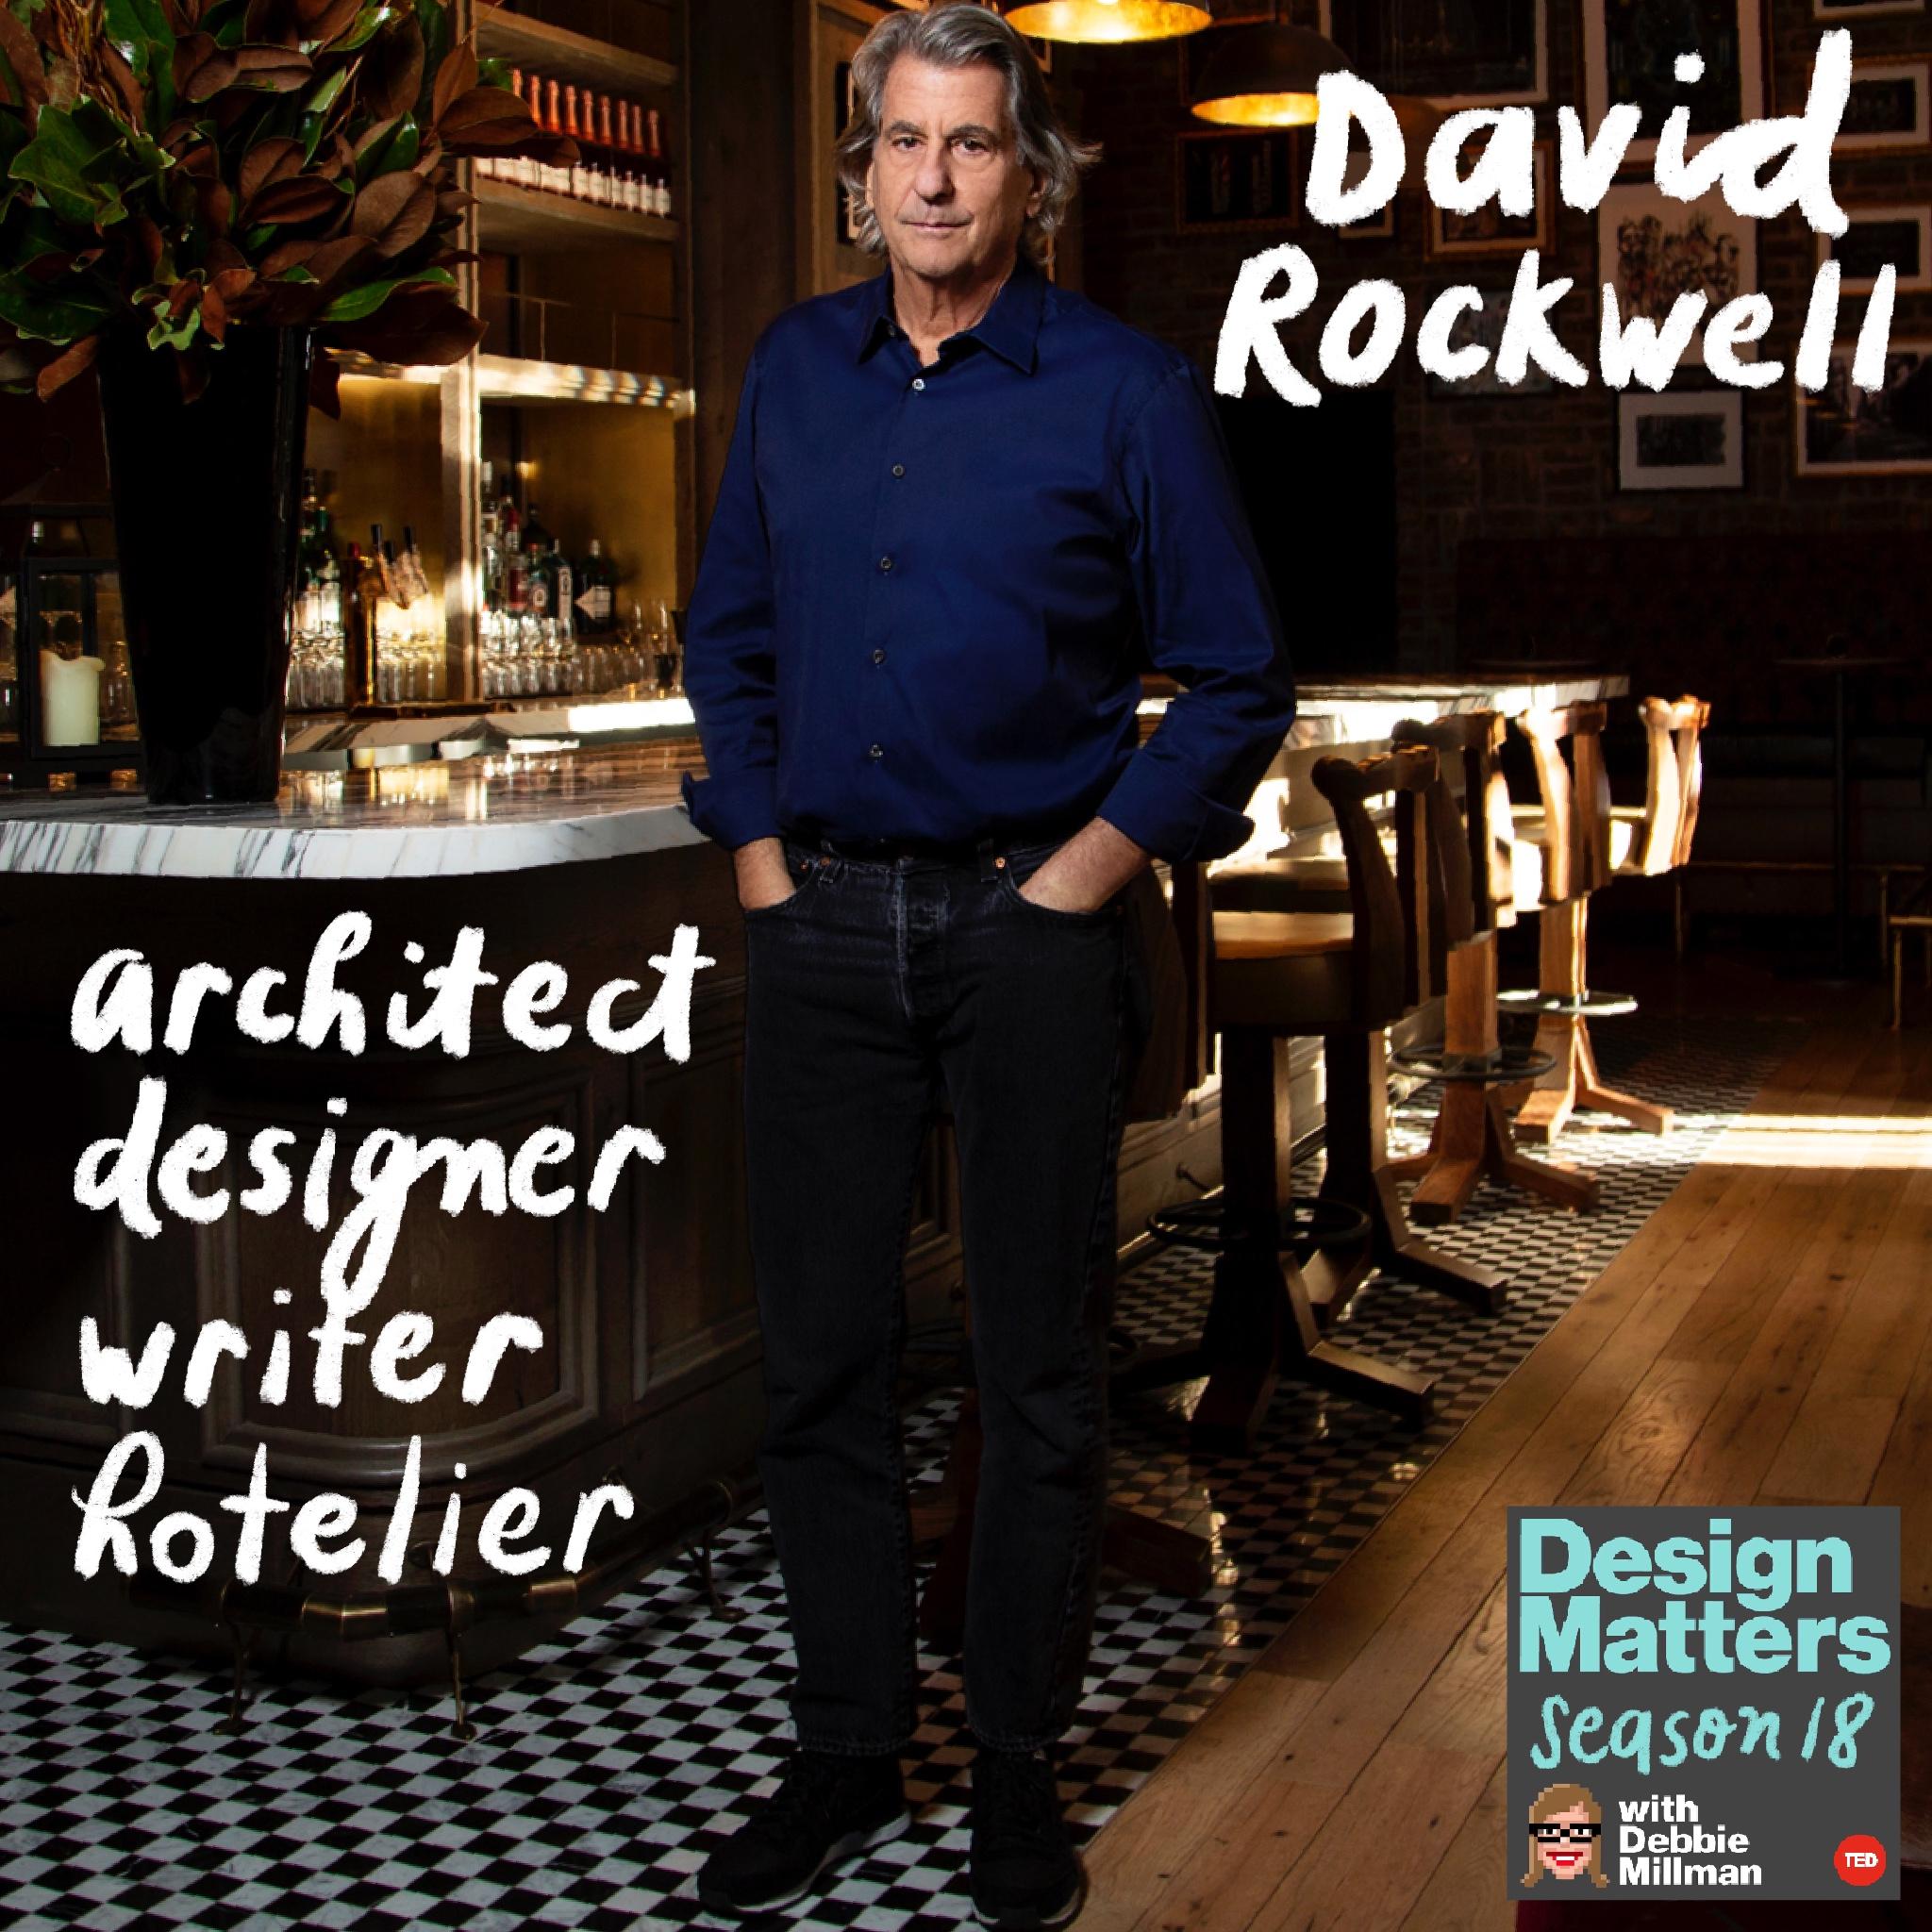 Thumbnail for "David Rockwell ".